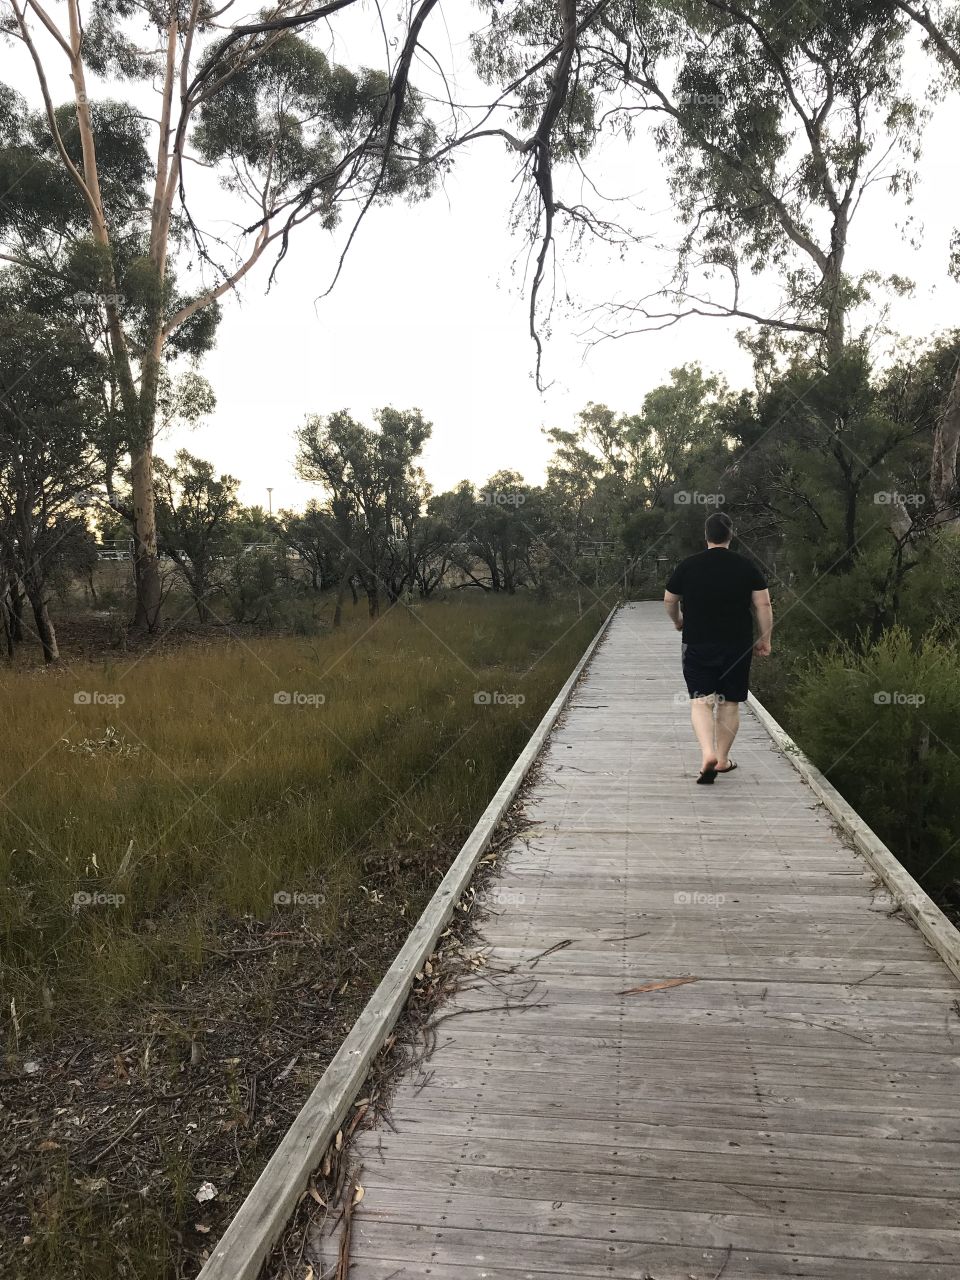 Walking through the Bush